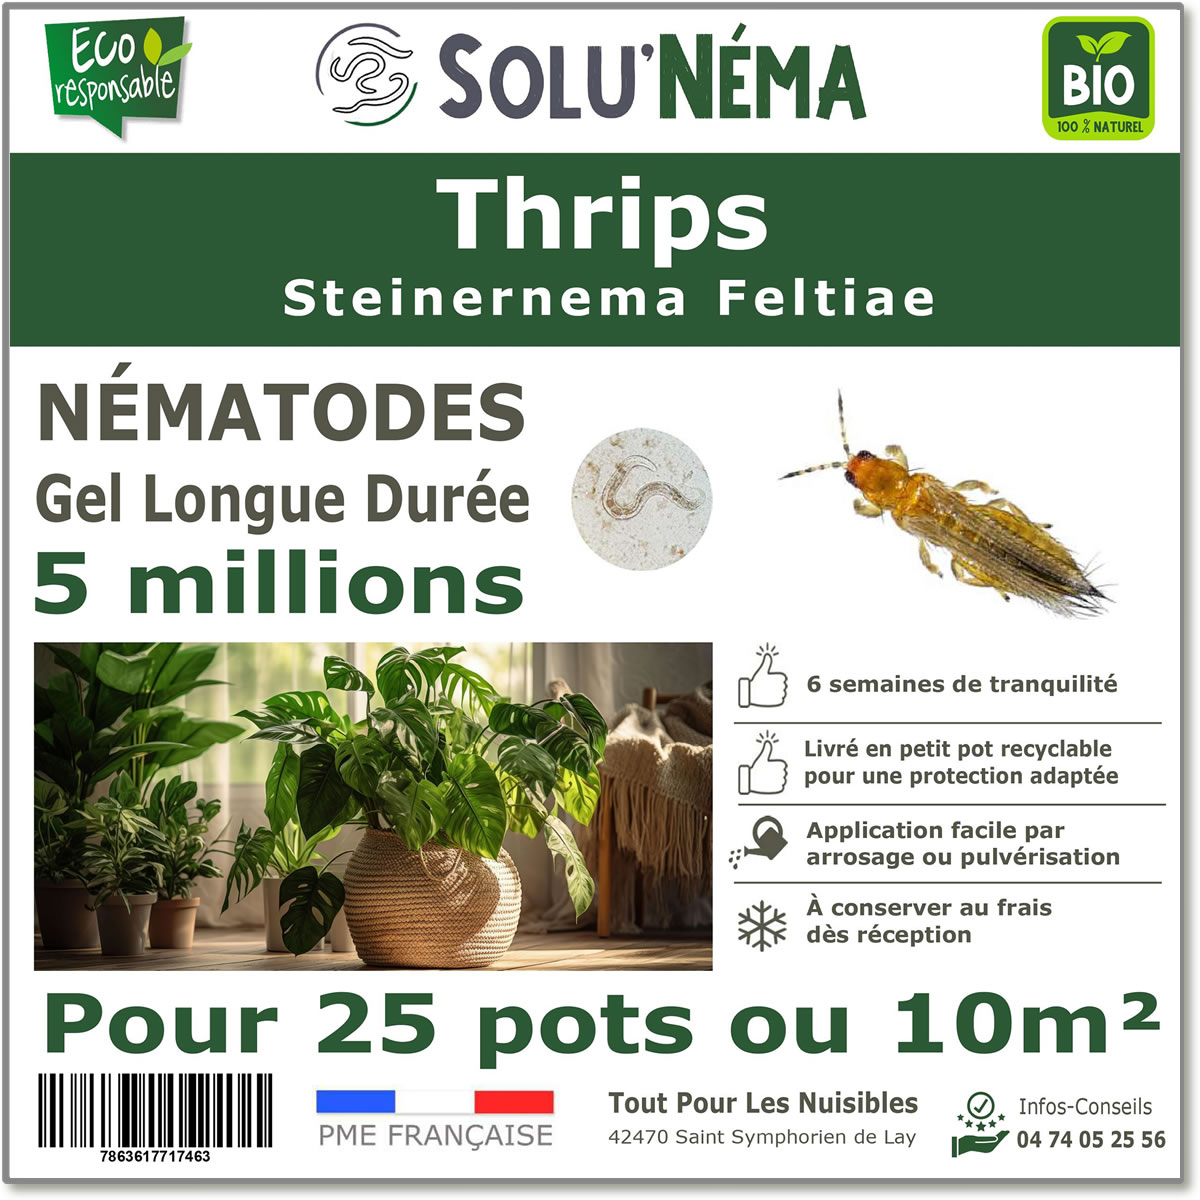 Nematodes (SF) Solunema for Thrips 5 million SF